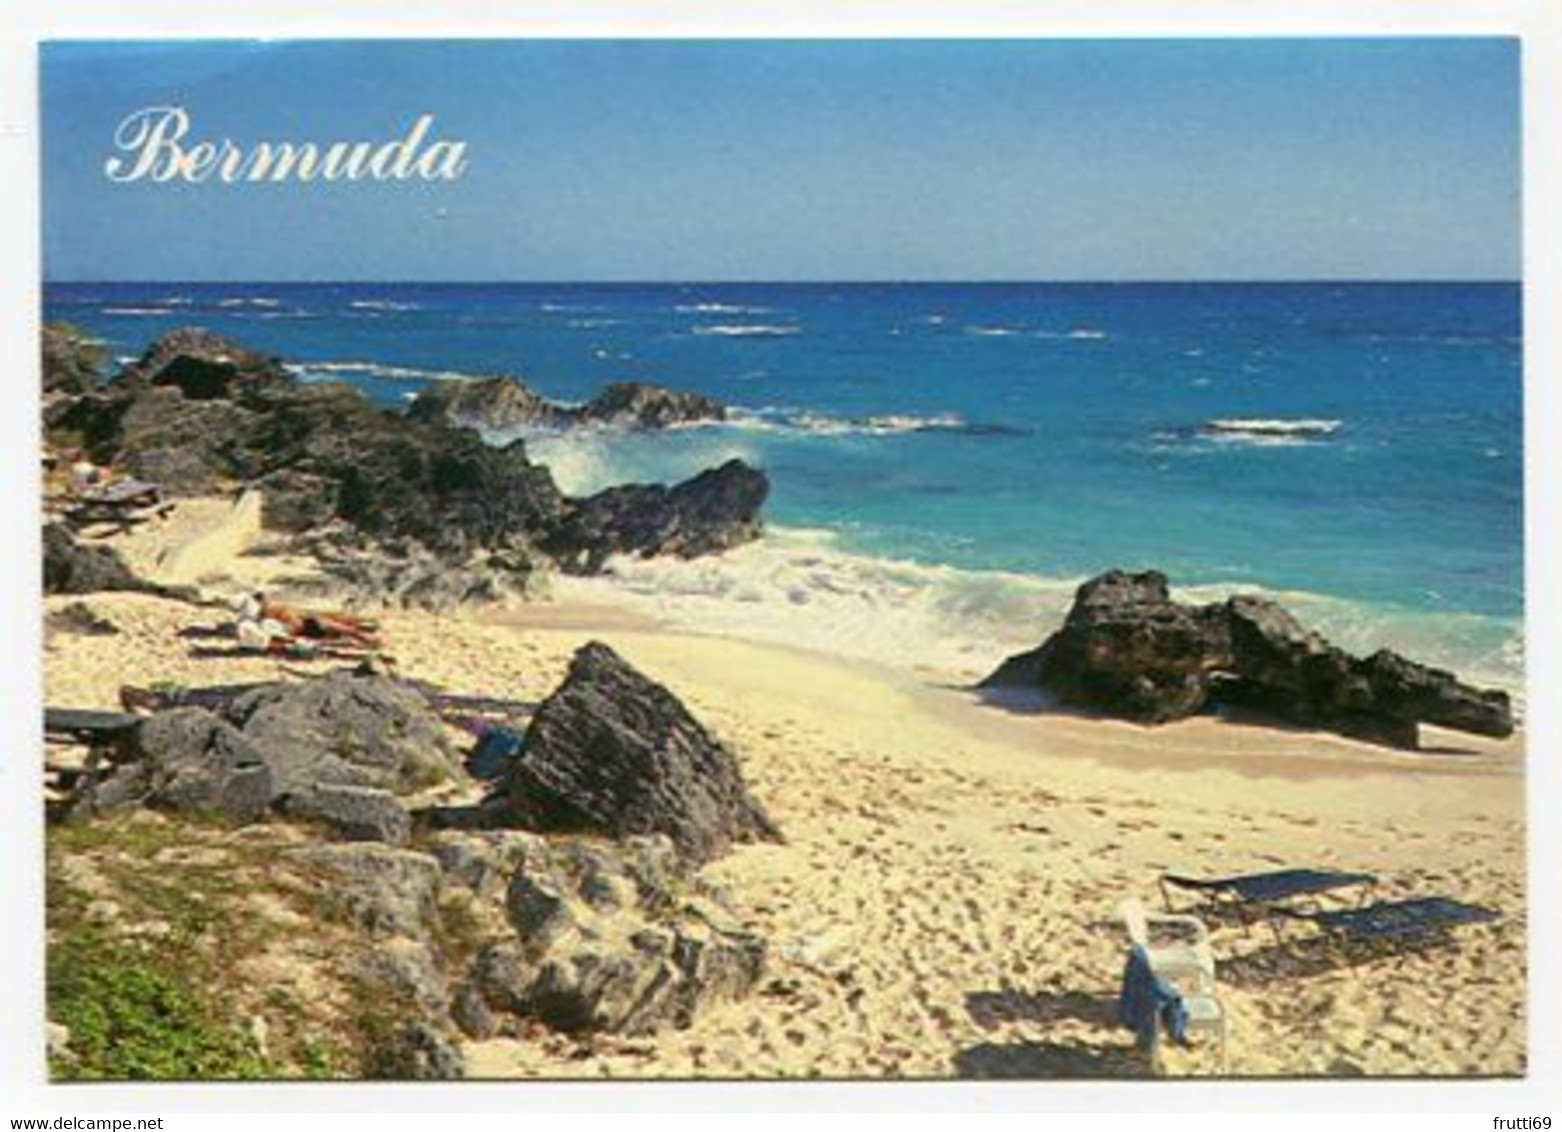 AK 047495 BERMUDA - Sunbathing - Bermuda